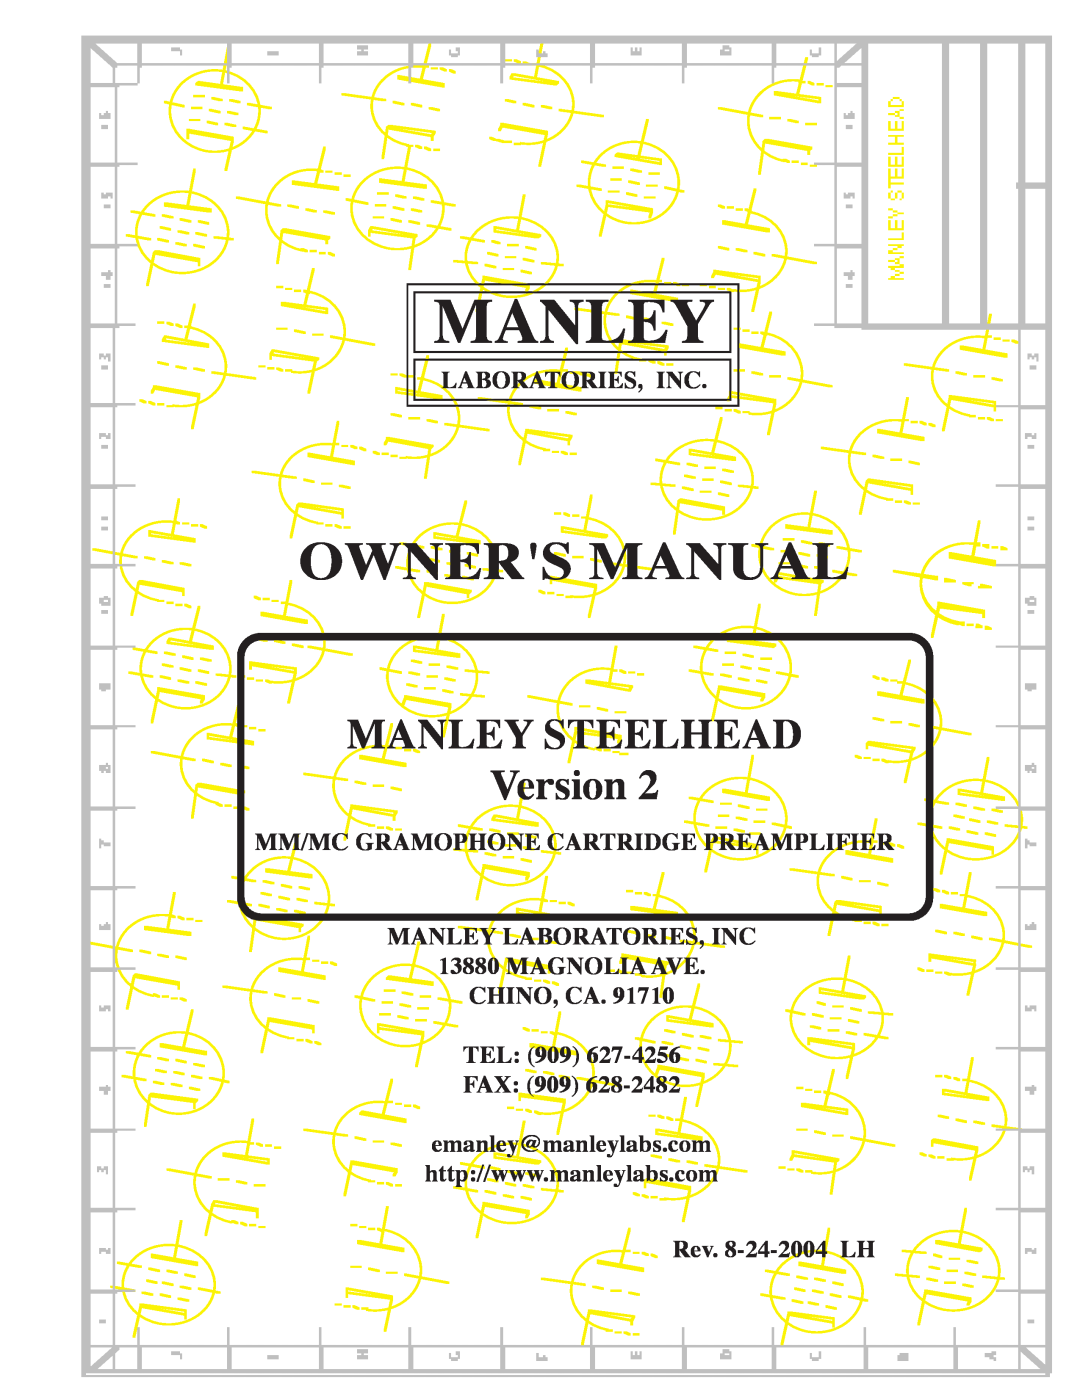 Manley Labs MM/MC GRAMOPHONE CARTRIDGE PREAMPLIFIER owner manual Manley Steelhead, Rev. 8-24-2004LH, Version, Magnolia Ave 